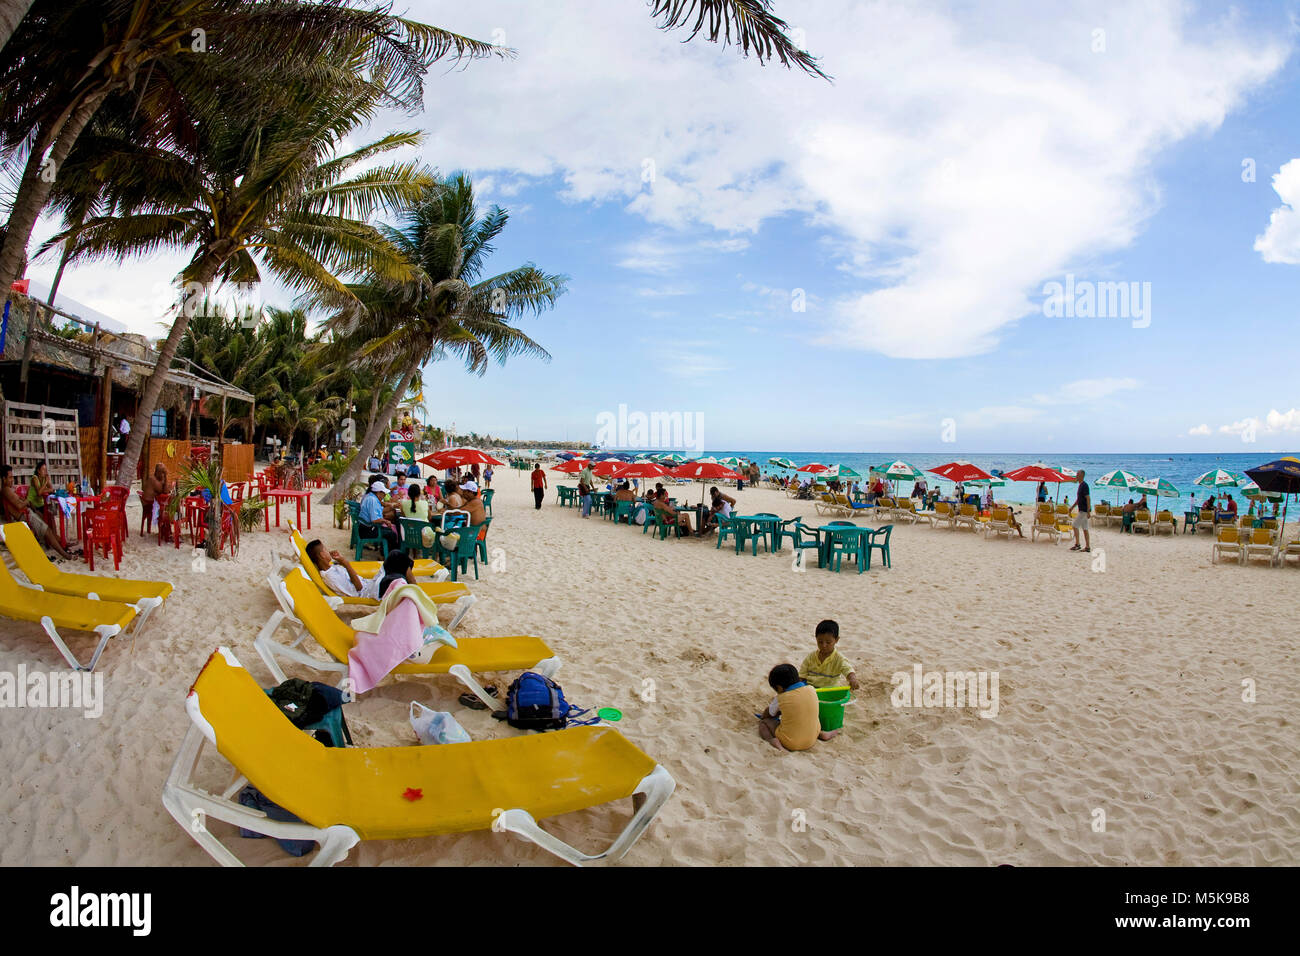 Touristen am Strand von Playa del Carmen, Mexiko, Karibik | Tourists at beach of Playa del Carmen, Mexico, Caribbean Stock Photo